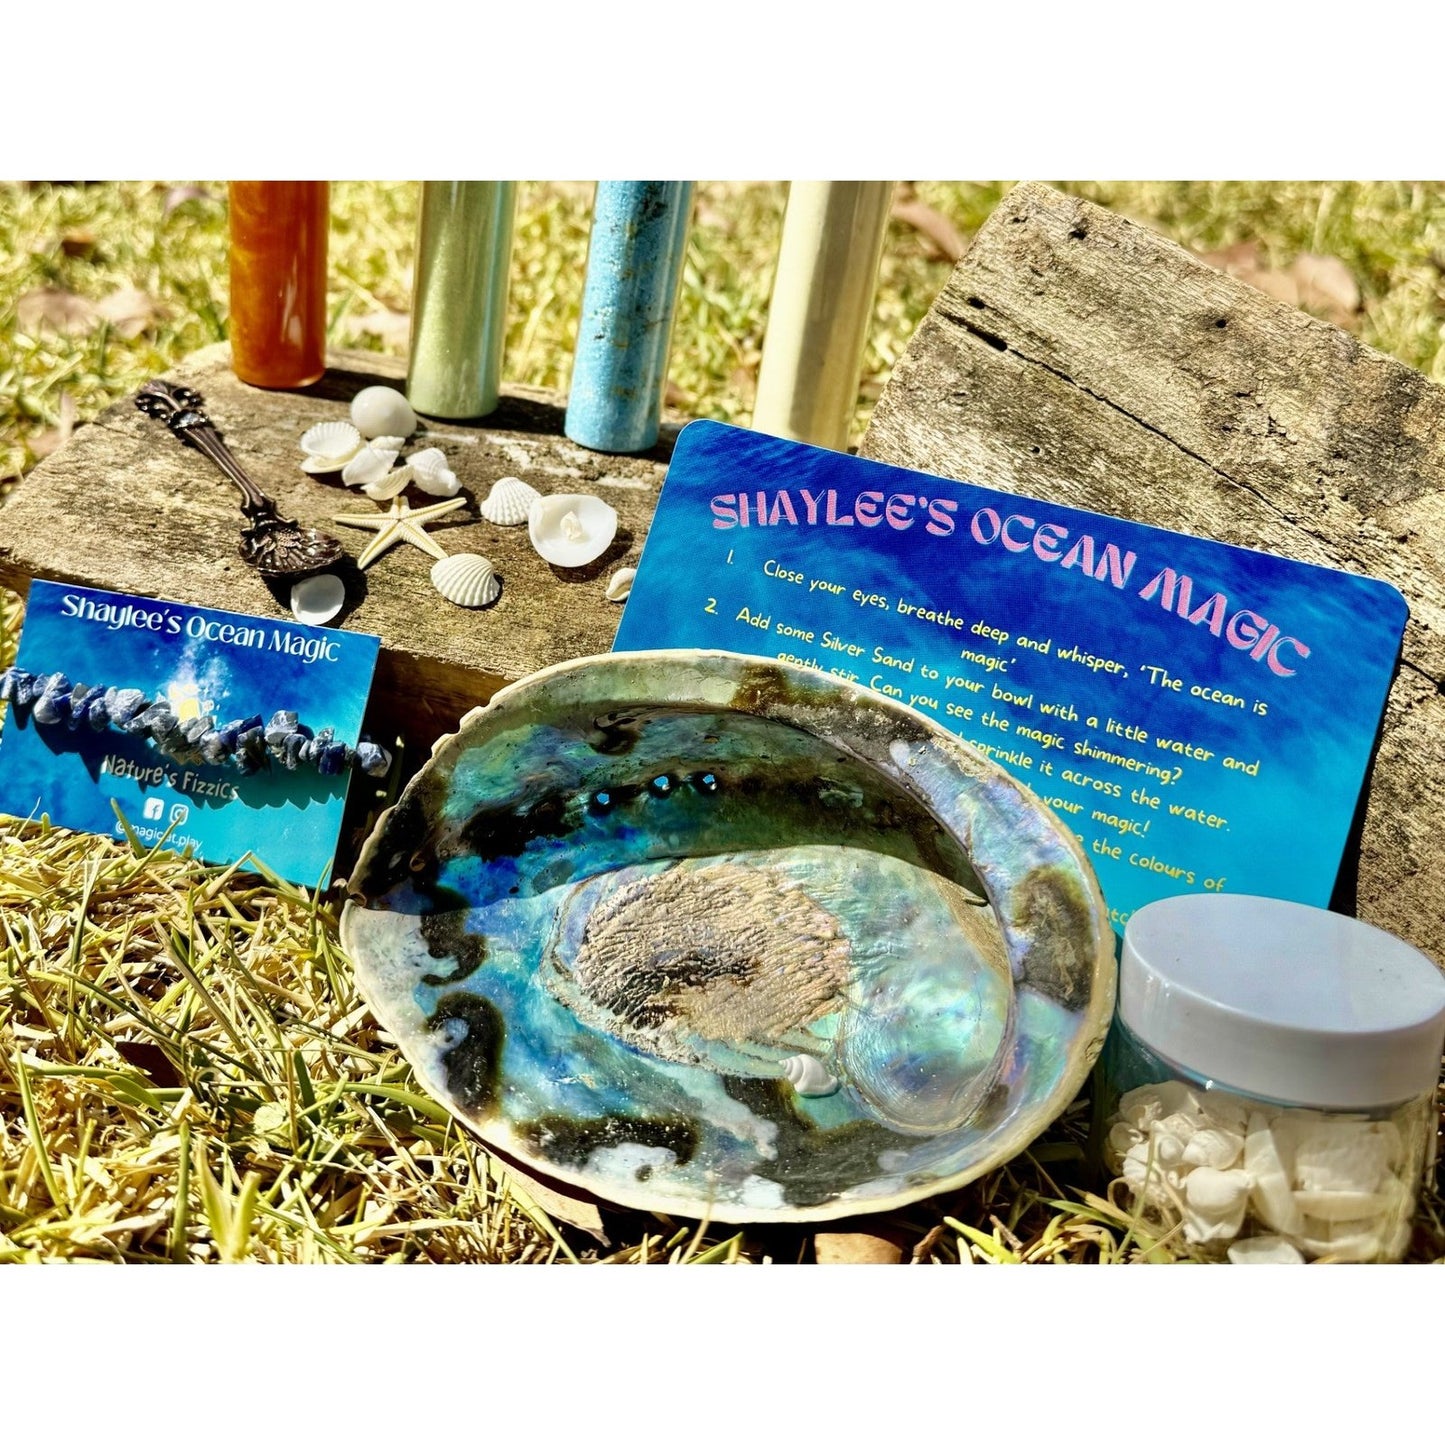 Shaylee's Ocean Magic Magic at Play